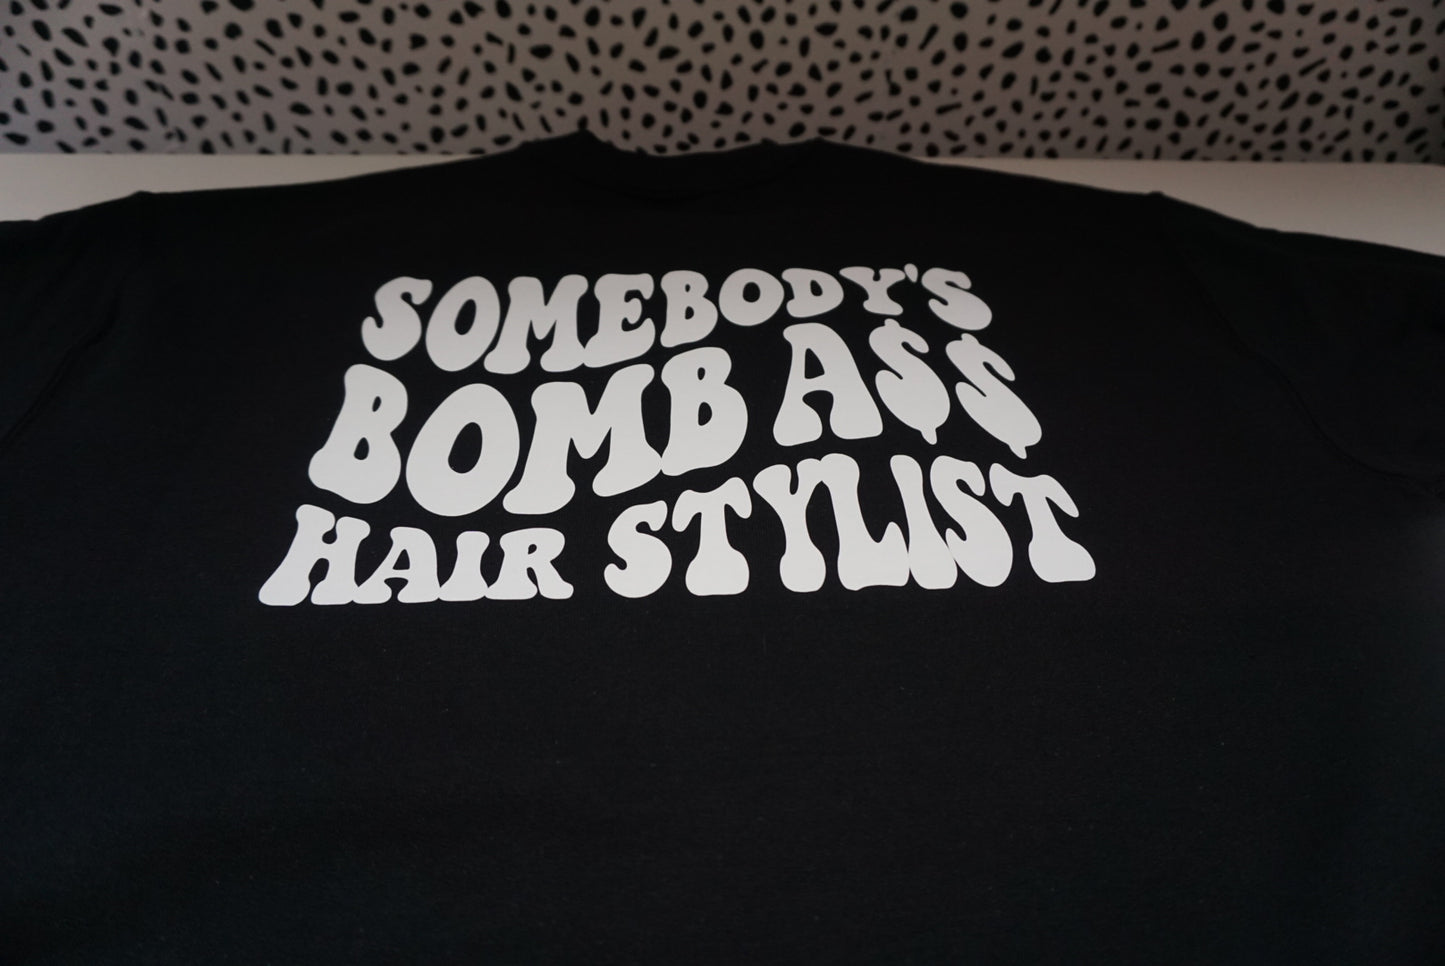 Somebody’s bomb ass hair stylist